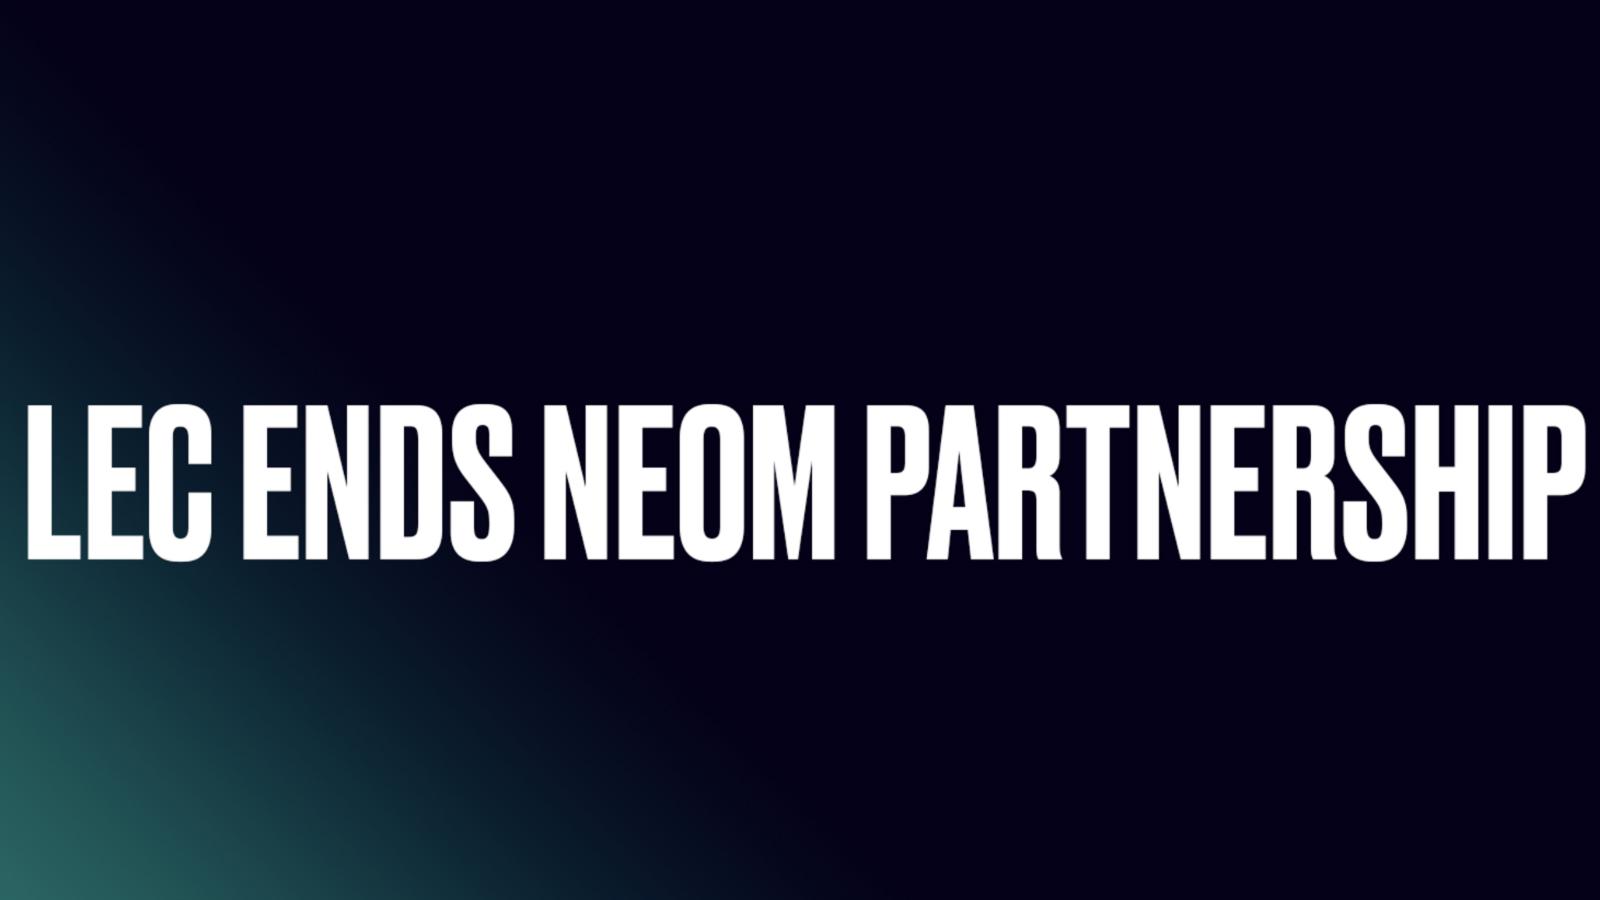 LEC ends NEOM Partnership